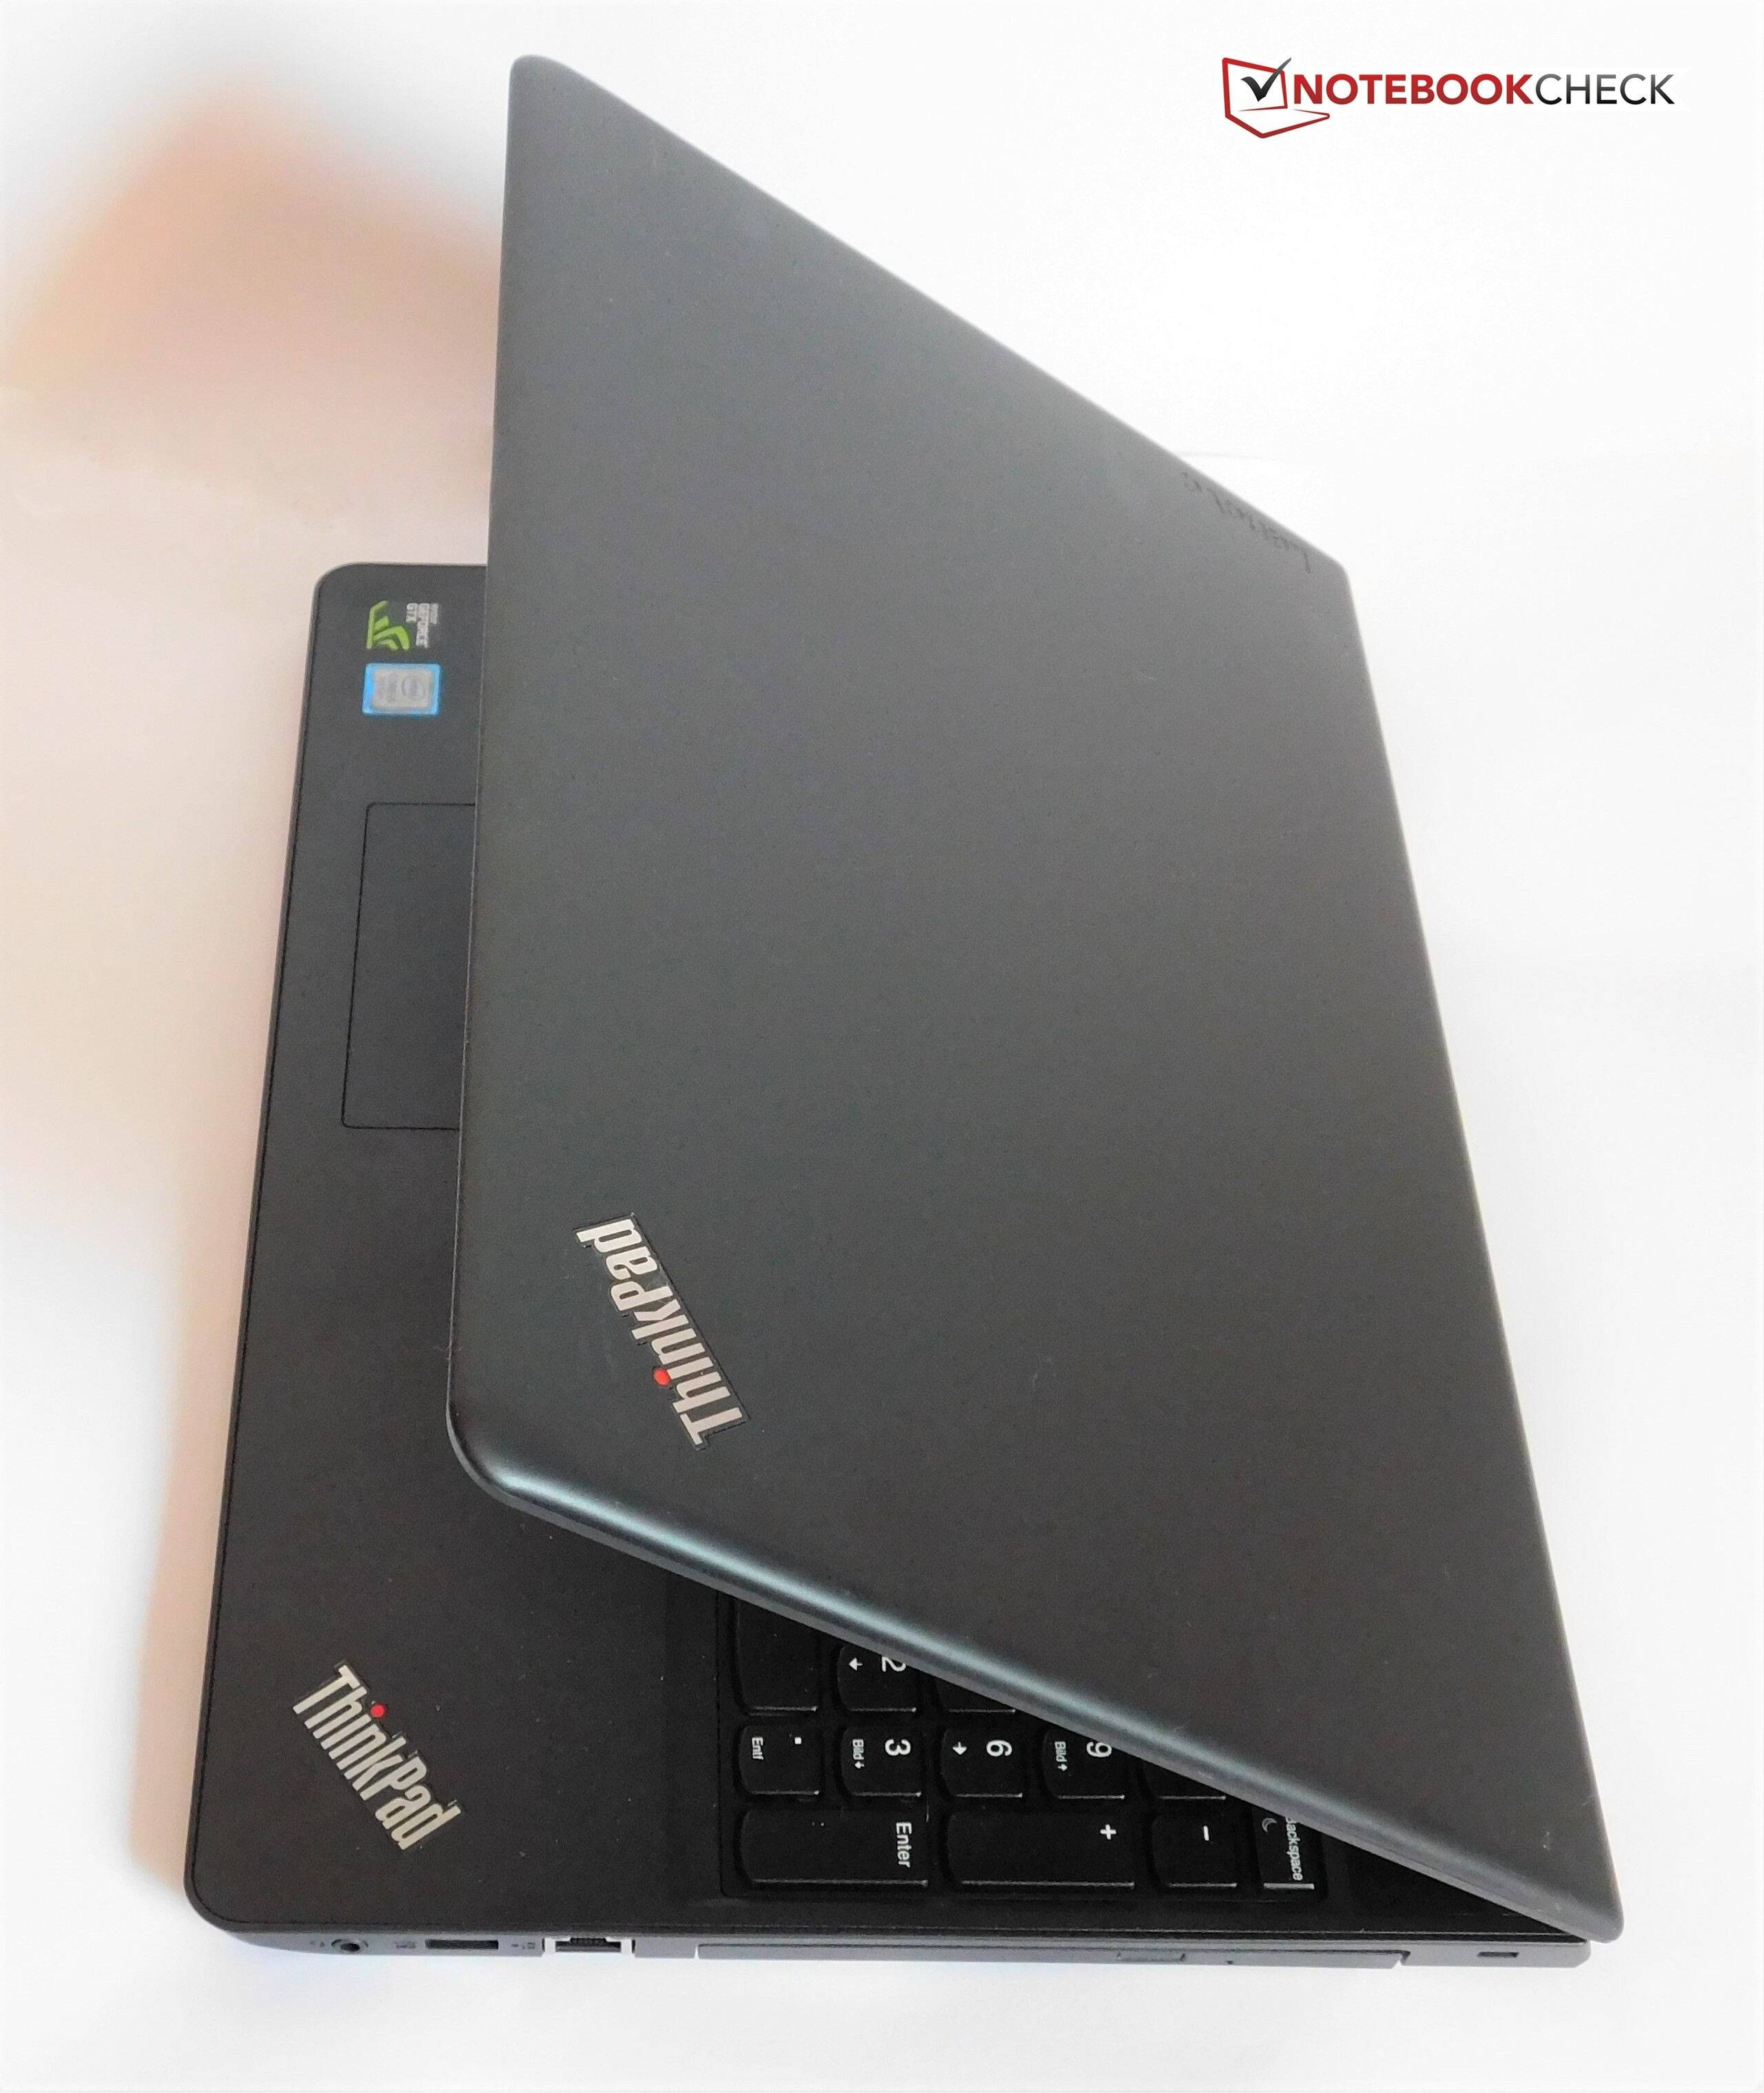 Lenovo thinkpad 3570 13 inch macbook pro with retina display black friday deals